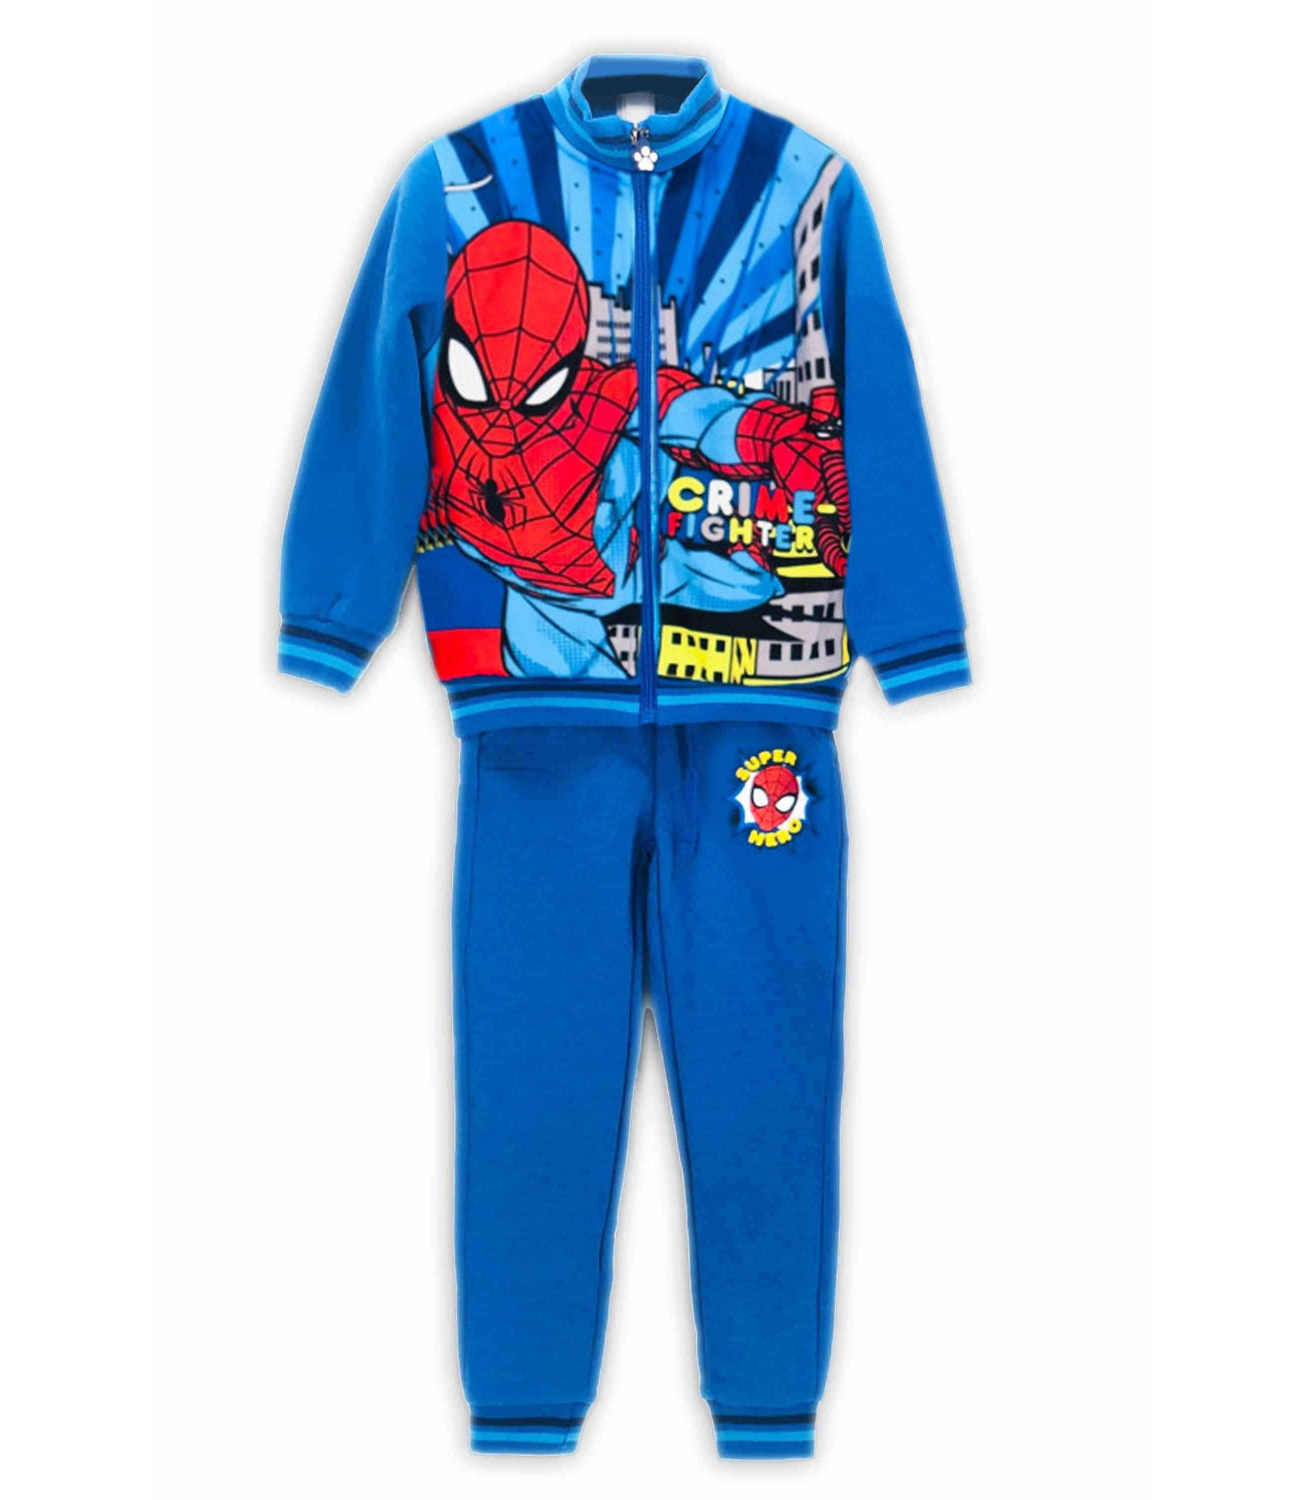 Spider-Man® Trening flausat albastru 104104